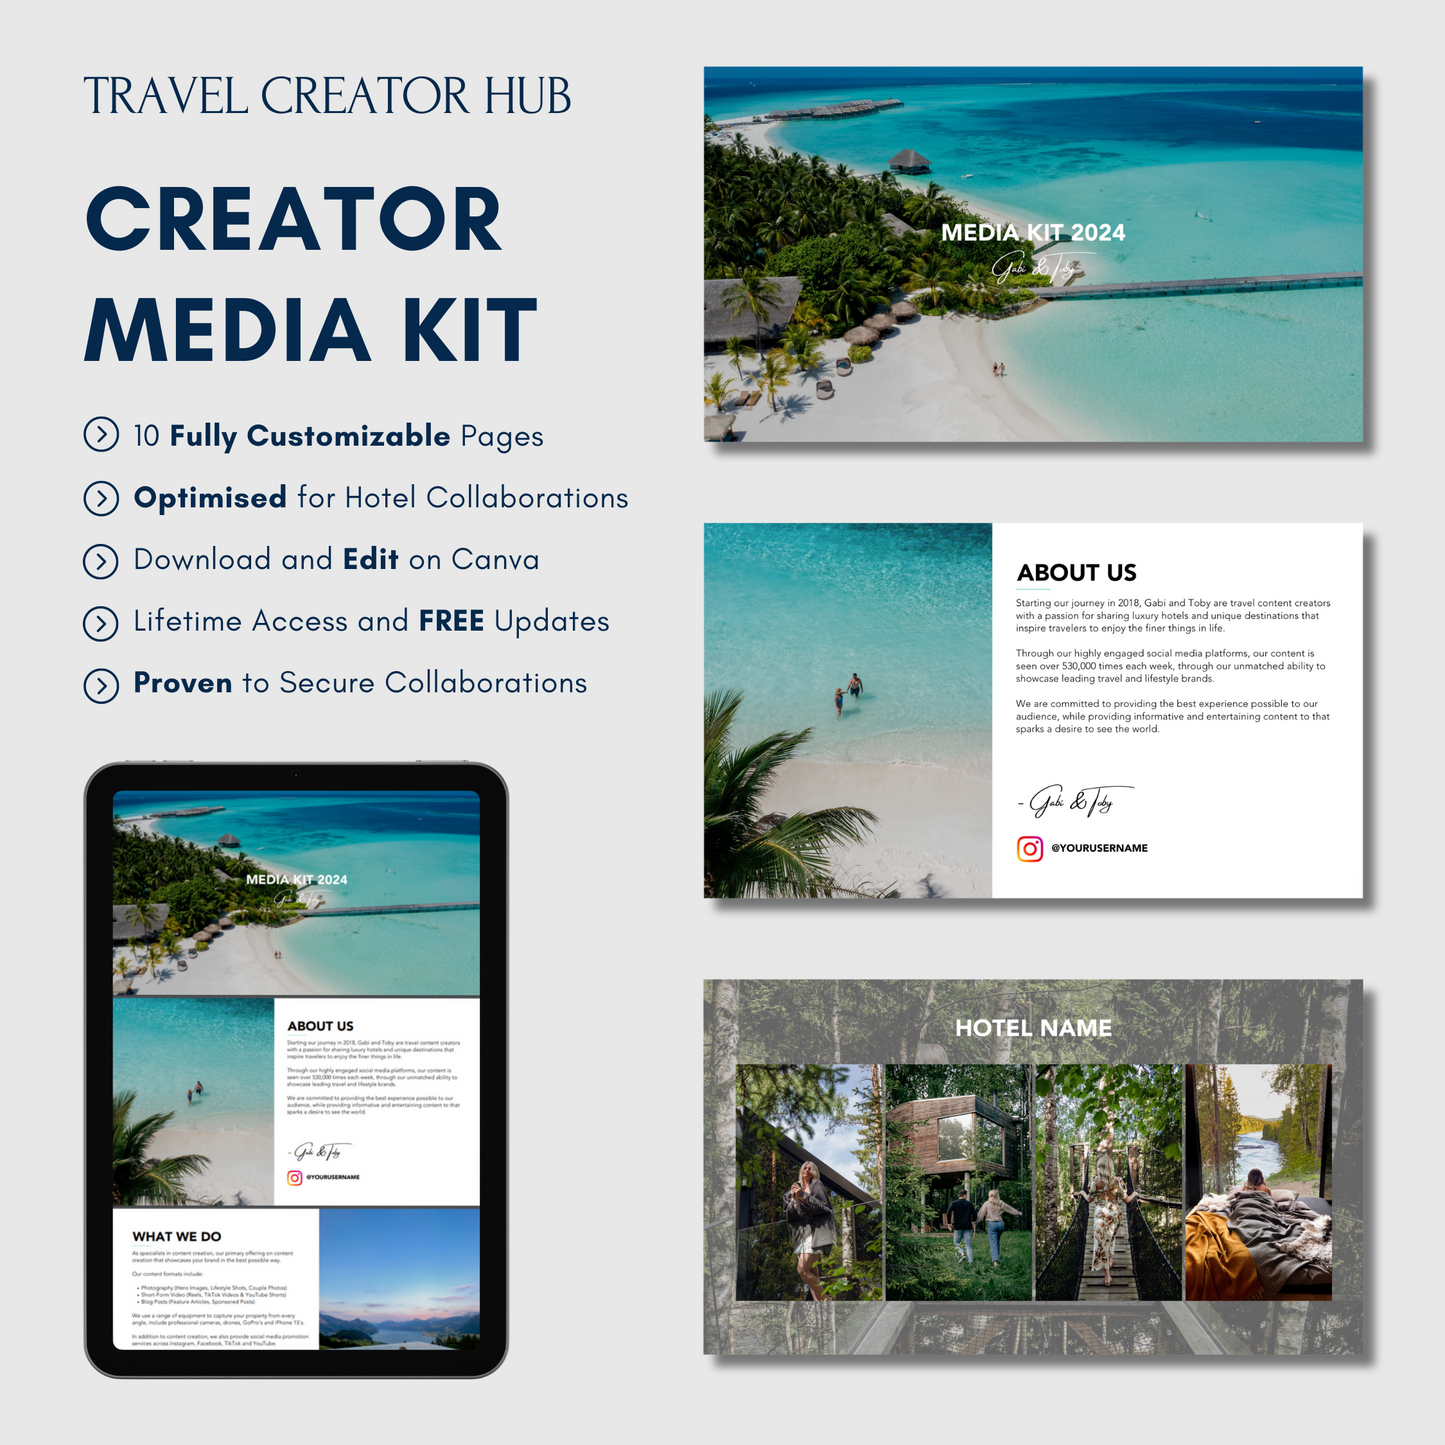 Creator Media Kit Template - Fully Customizable